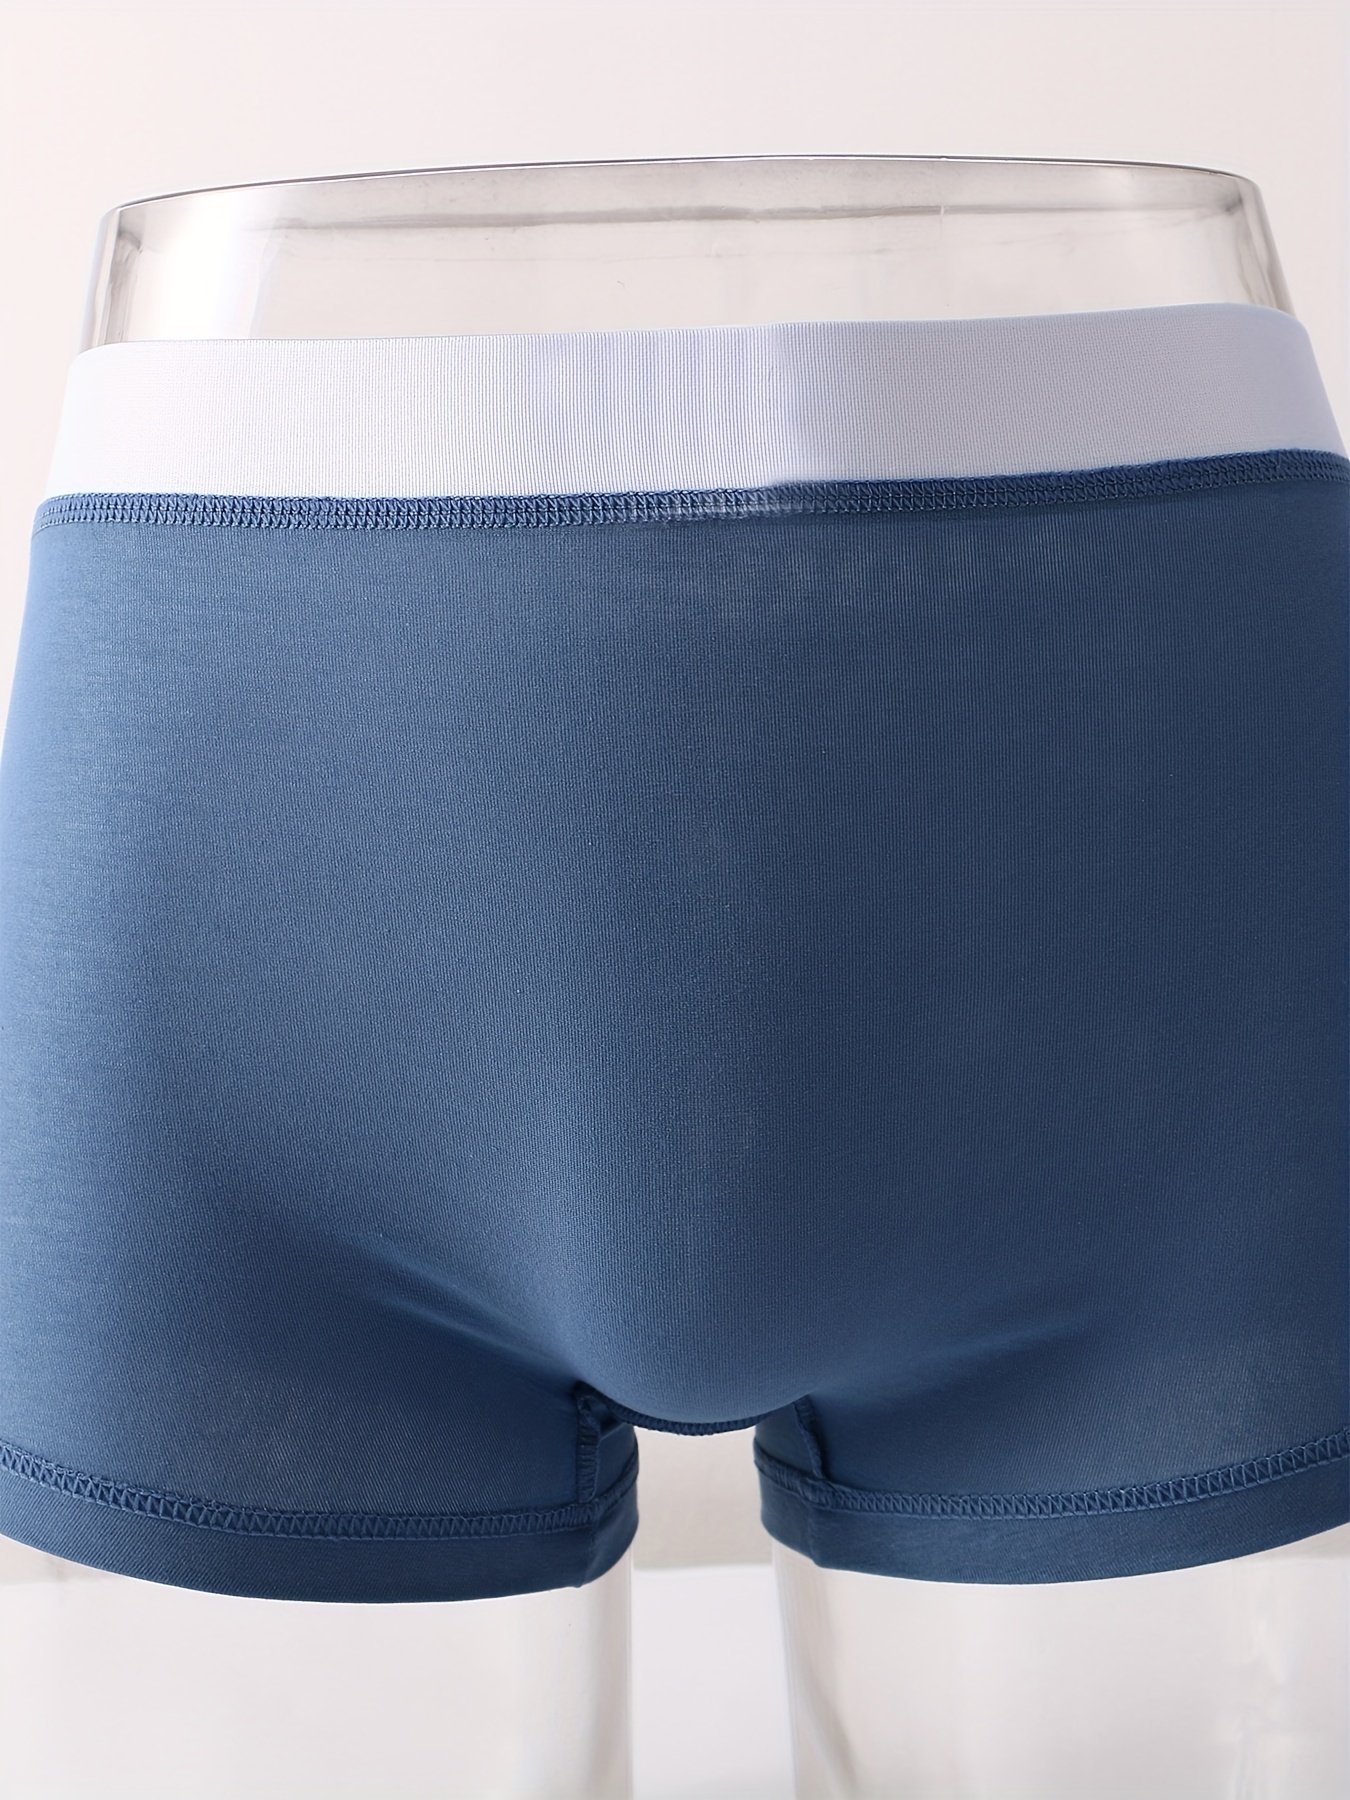 Men Univesal Underwear Clothing Penis Accessories Big Pouch